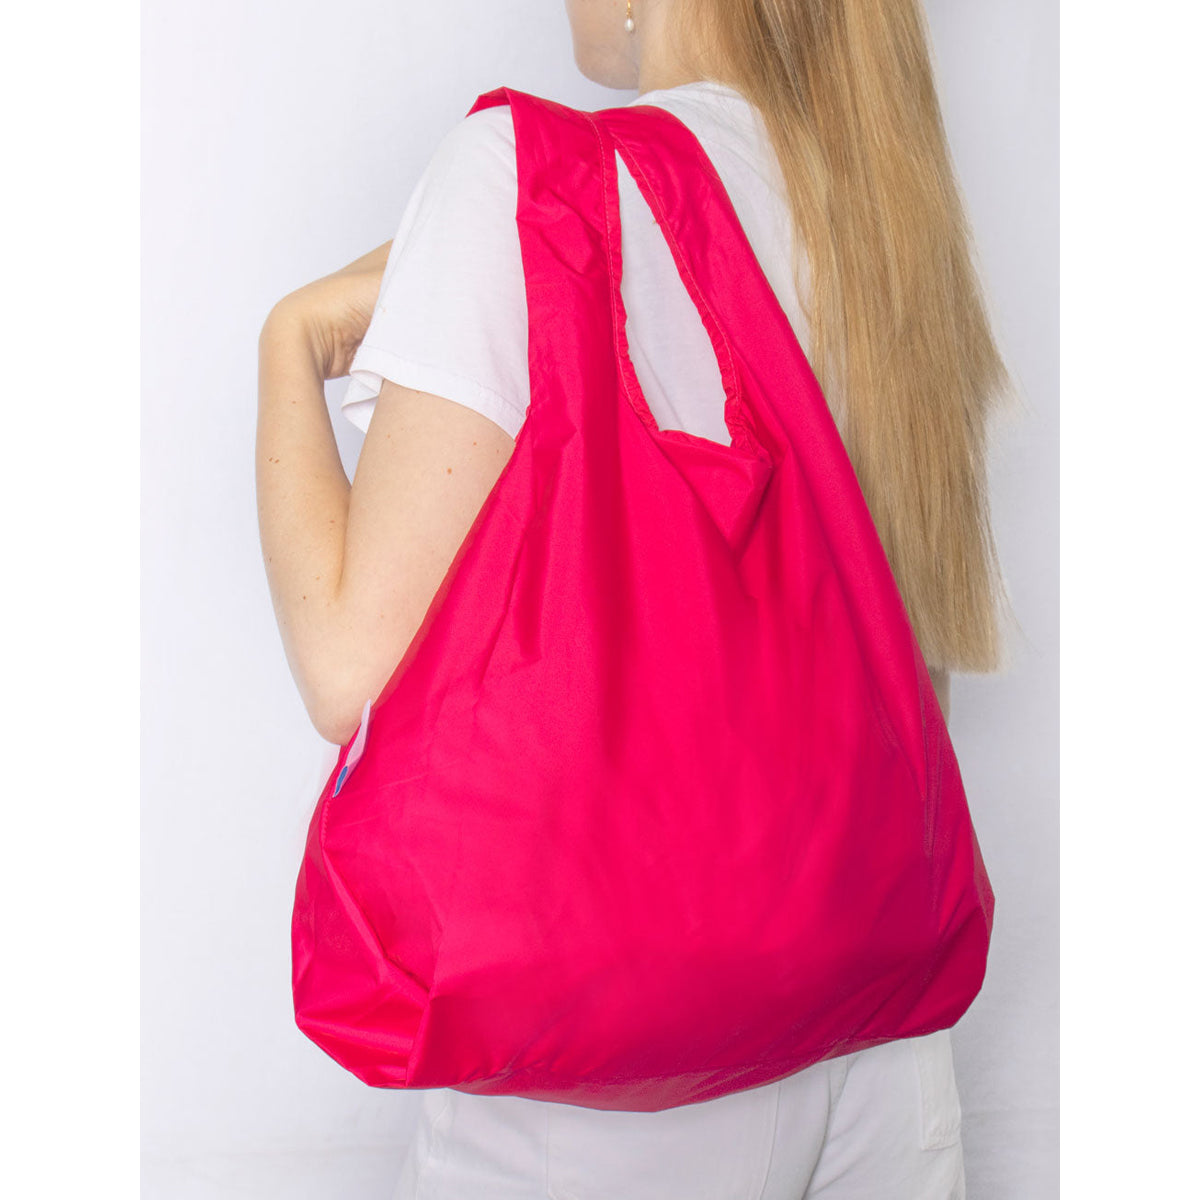 Kind Bag Reusable Foldaway Tote - Berry Pink 4